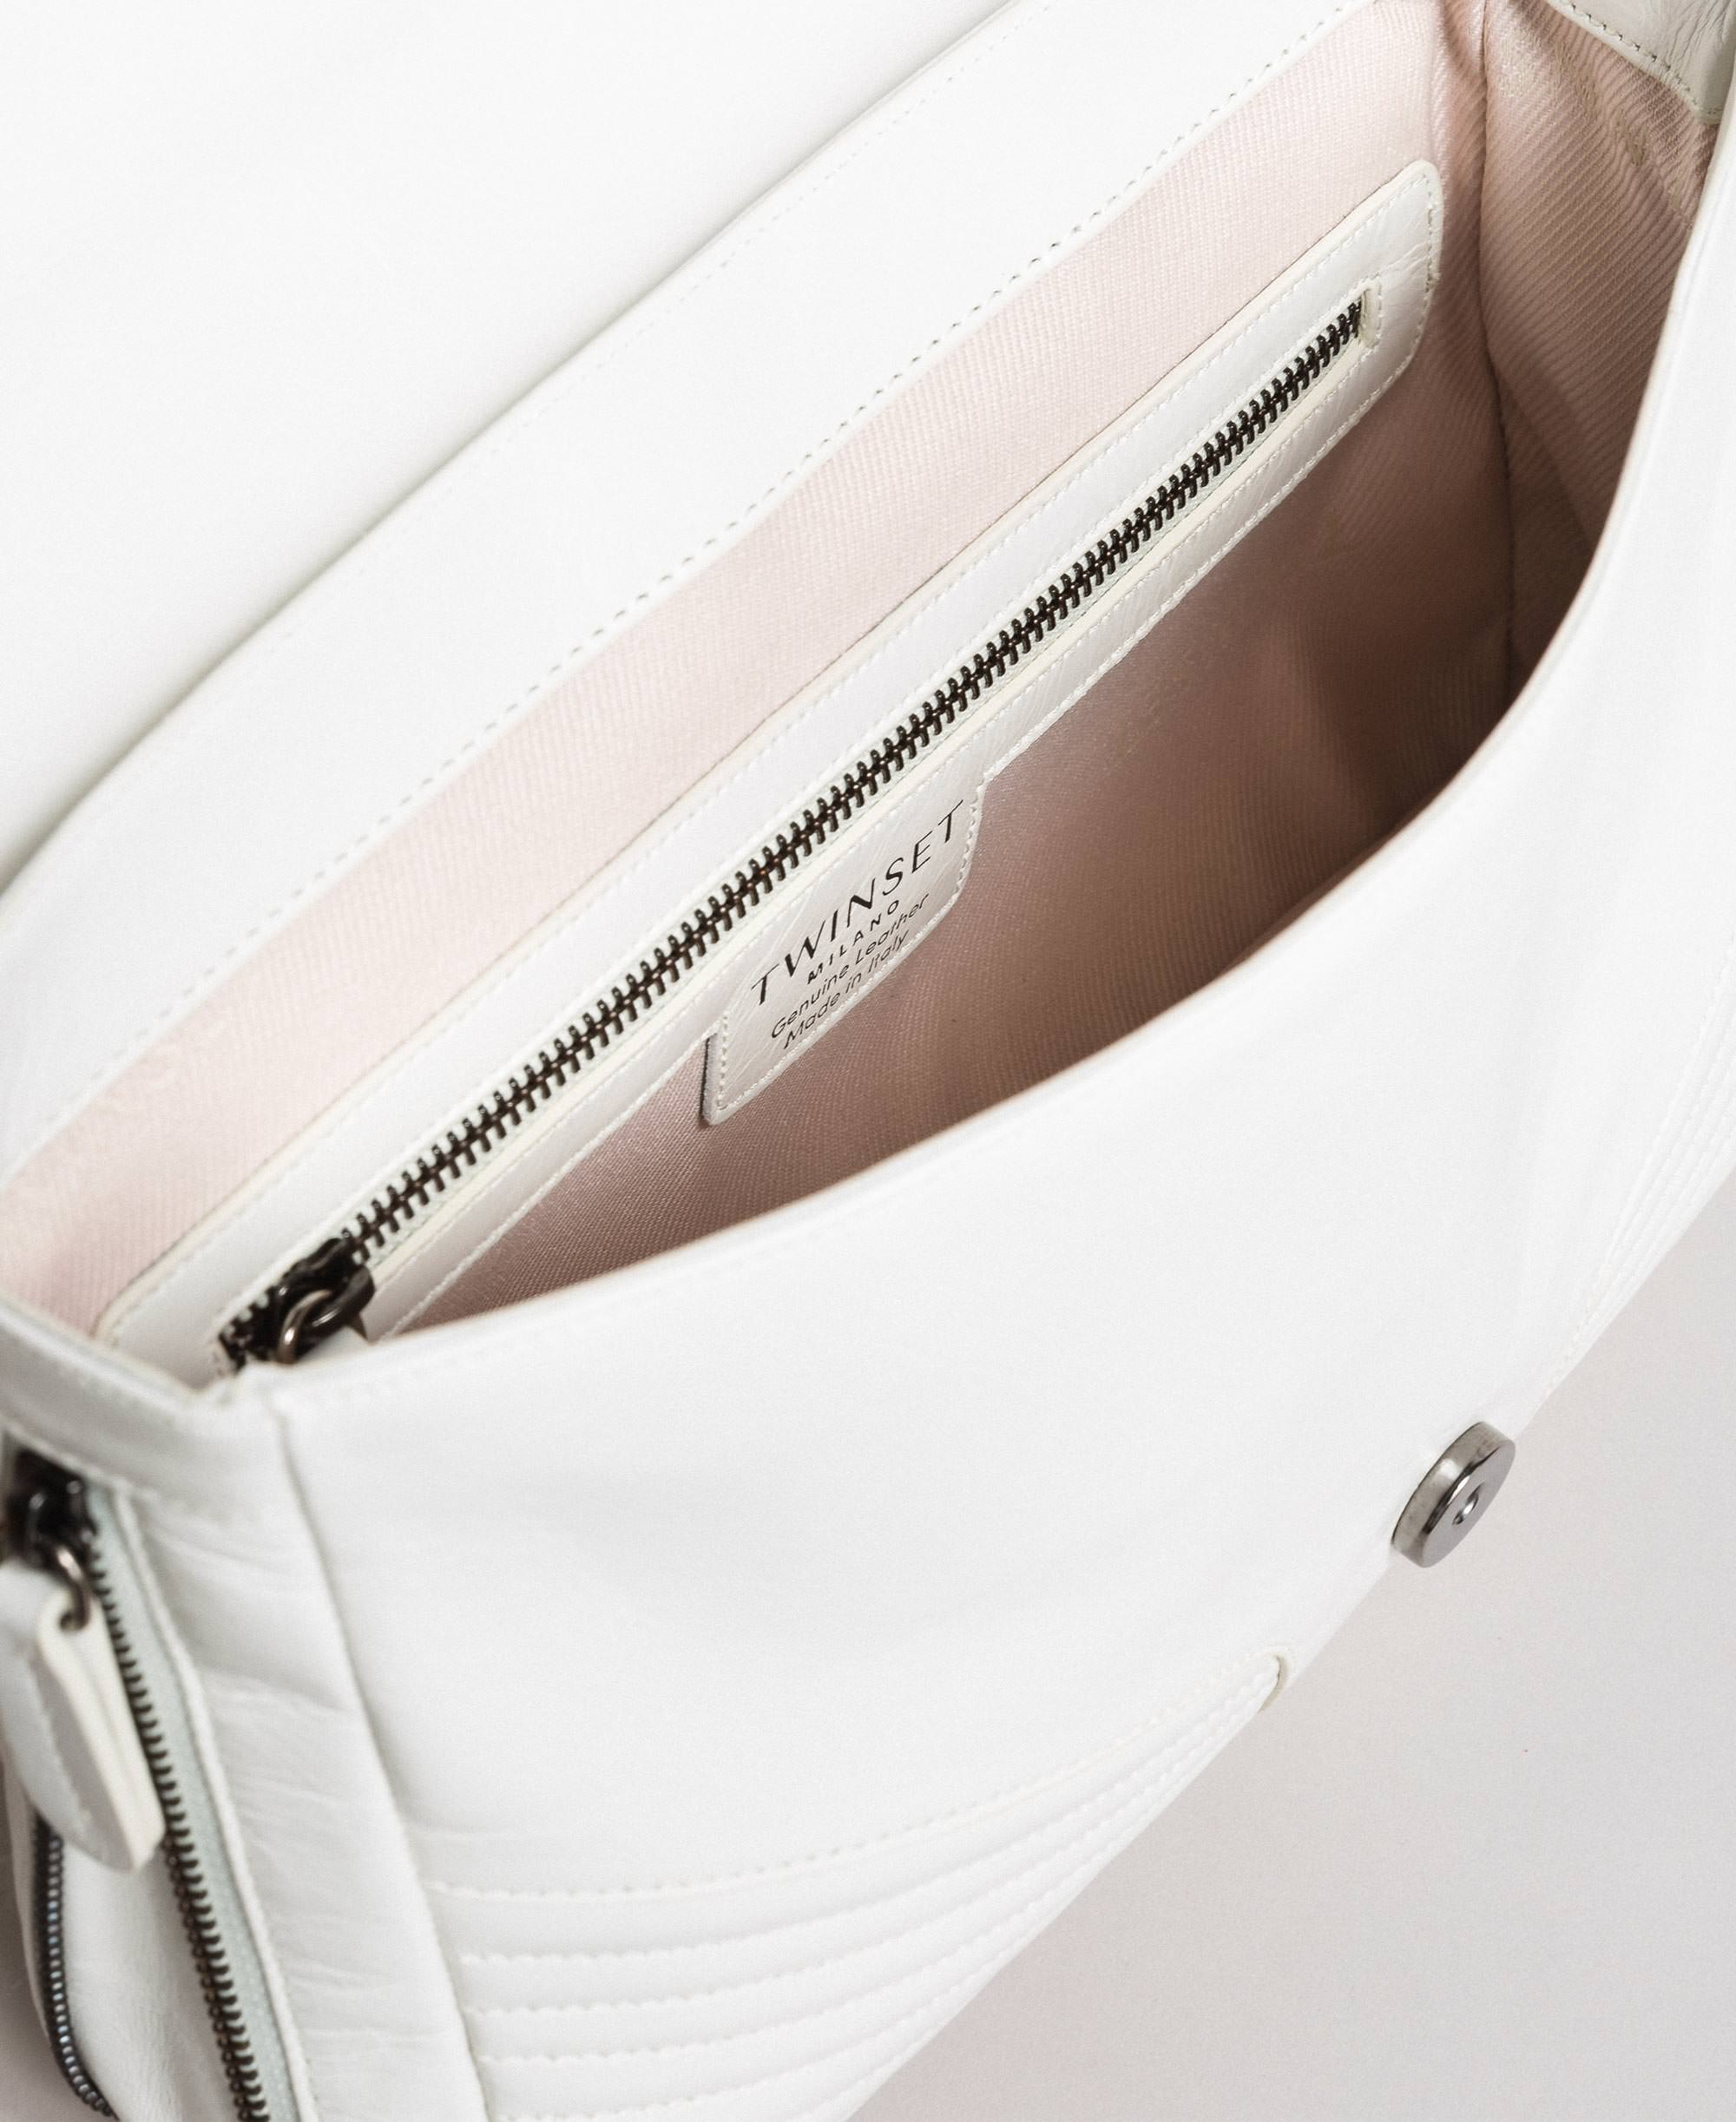 Сумка detail. Twinset Milano сумка. Сумка твинсет белая. Рюкзак Twin Set женский белый. Marly large Leather Shoulder Bag White.